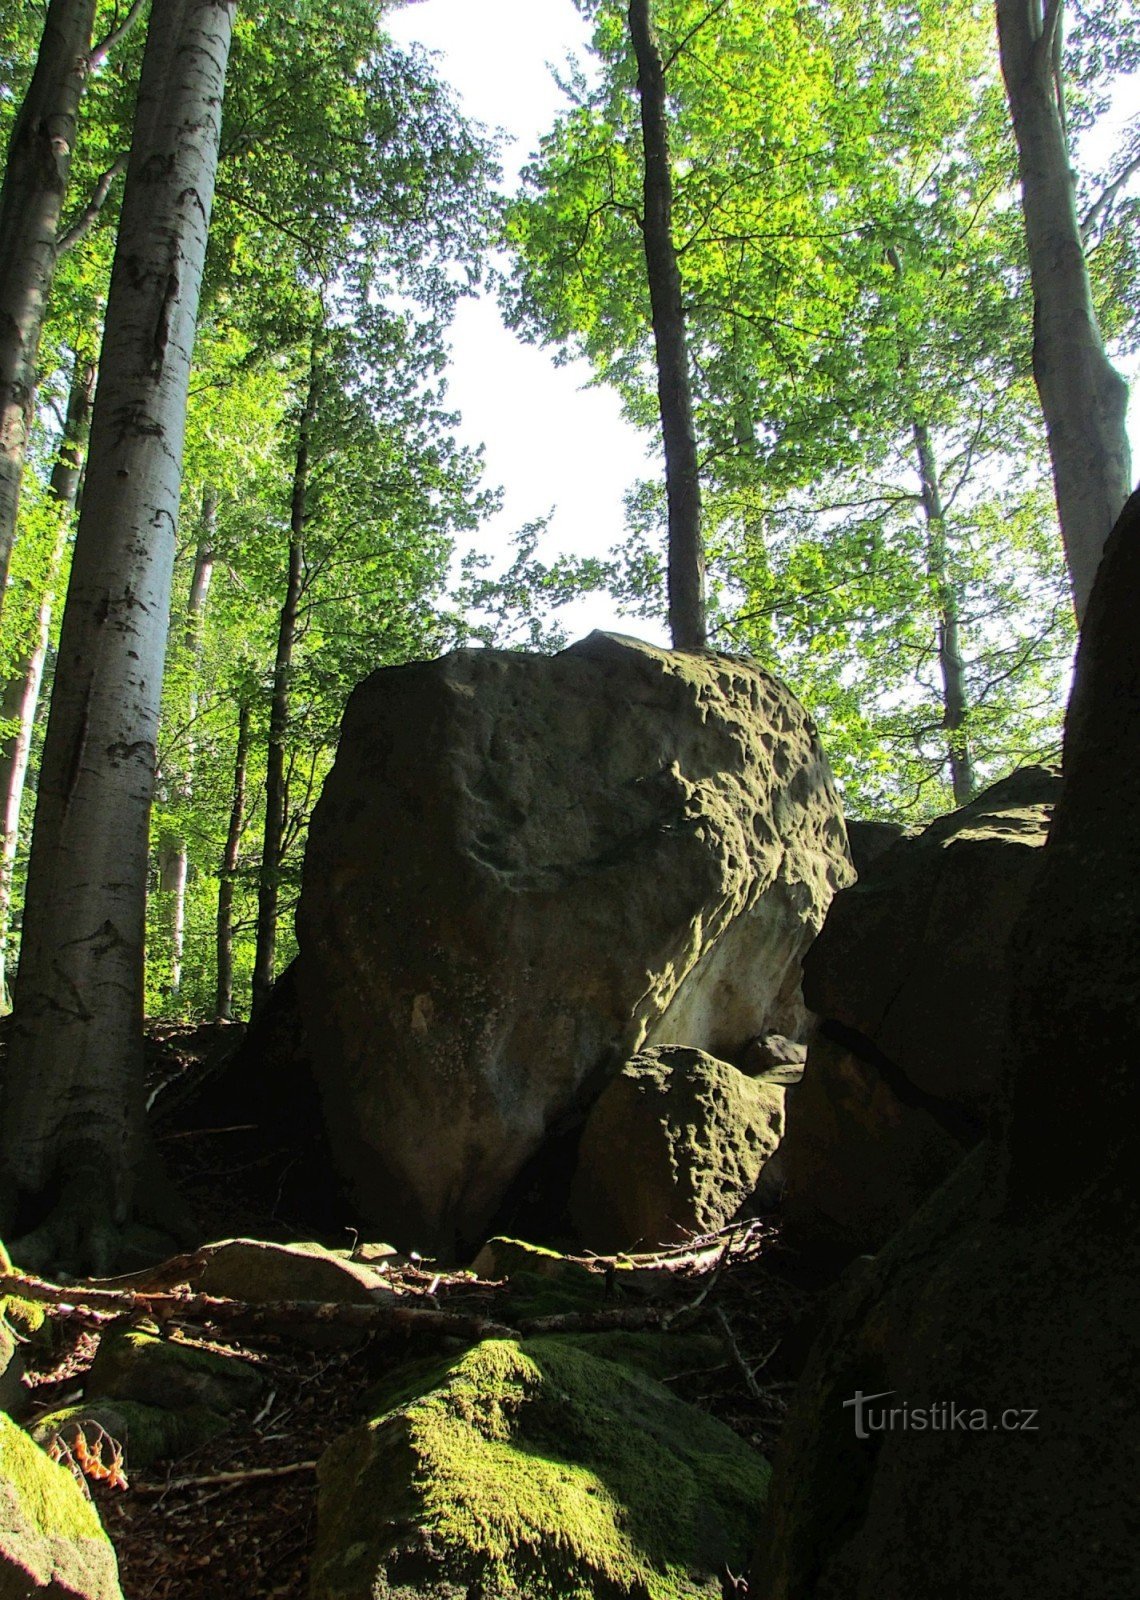 To the island of calm, to the Sochová rocks in the Hostýnské hills